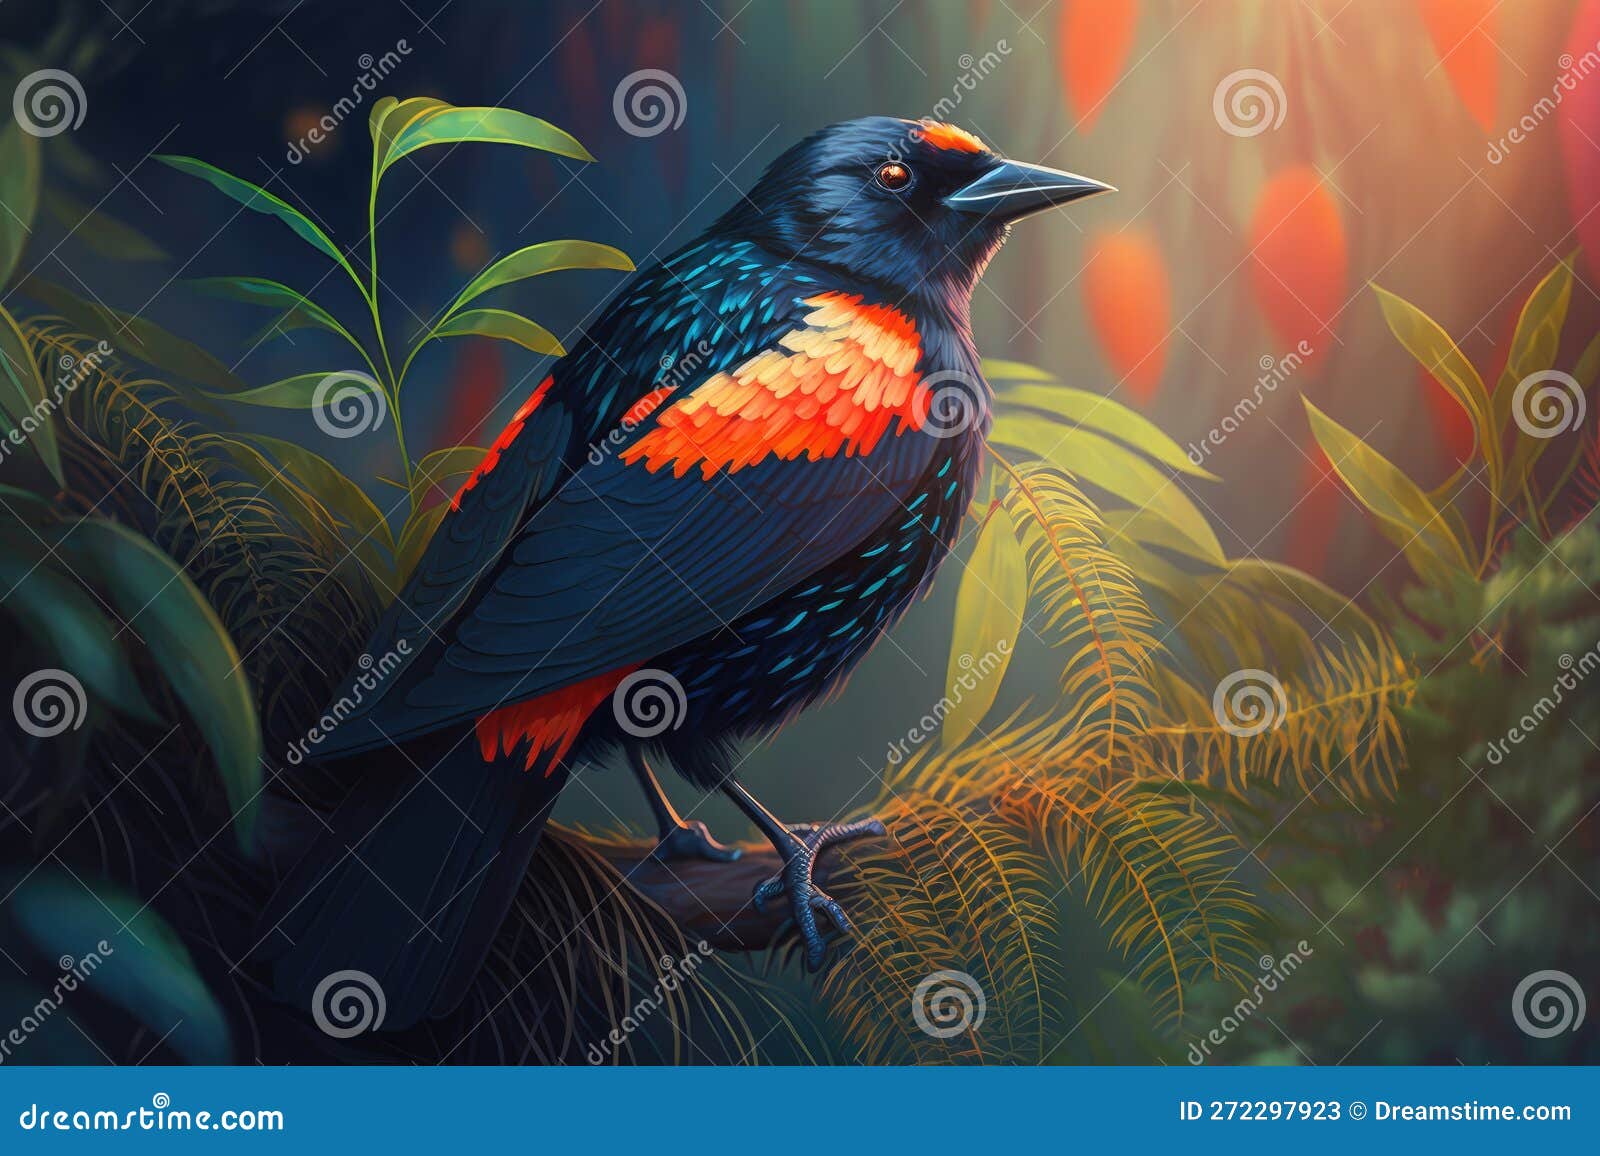 Red winged Blackbird by Chuck Day TattooNOW